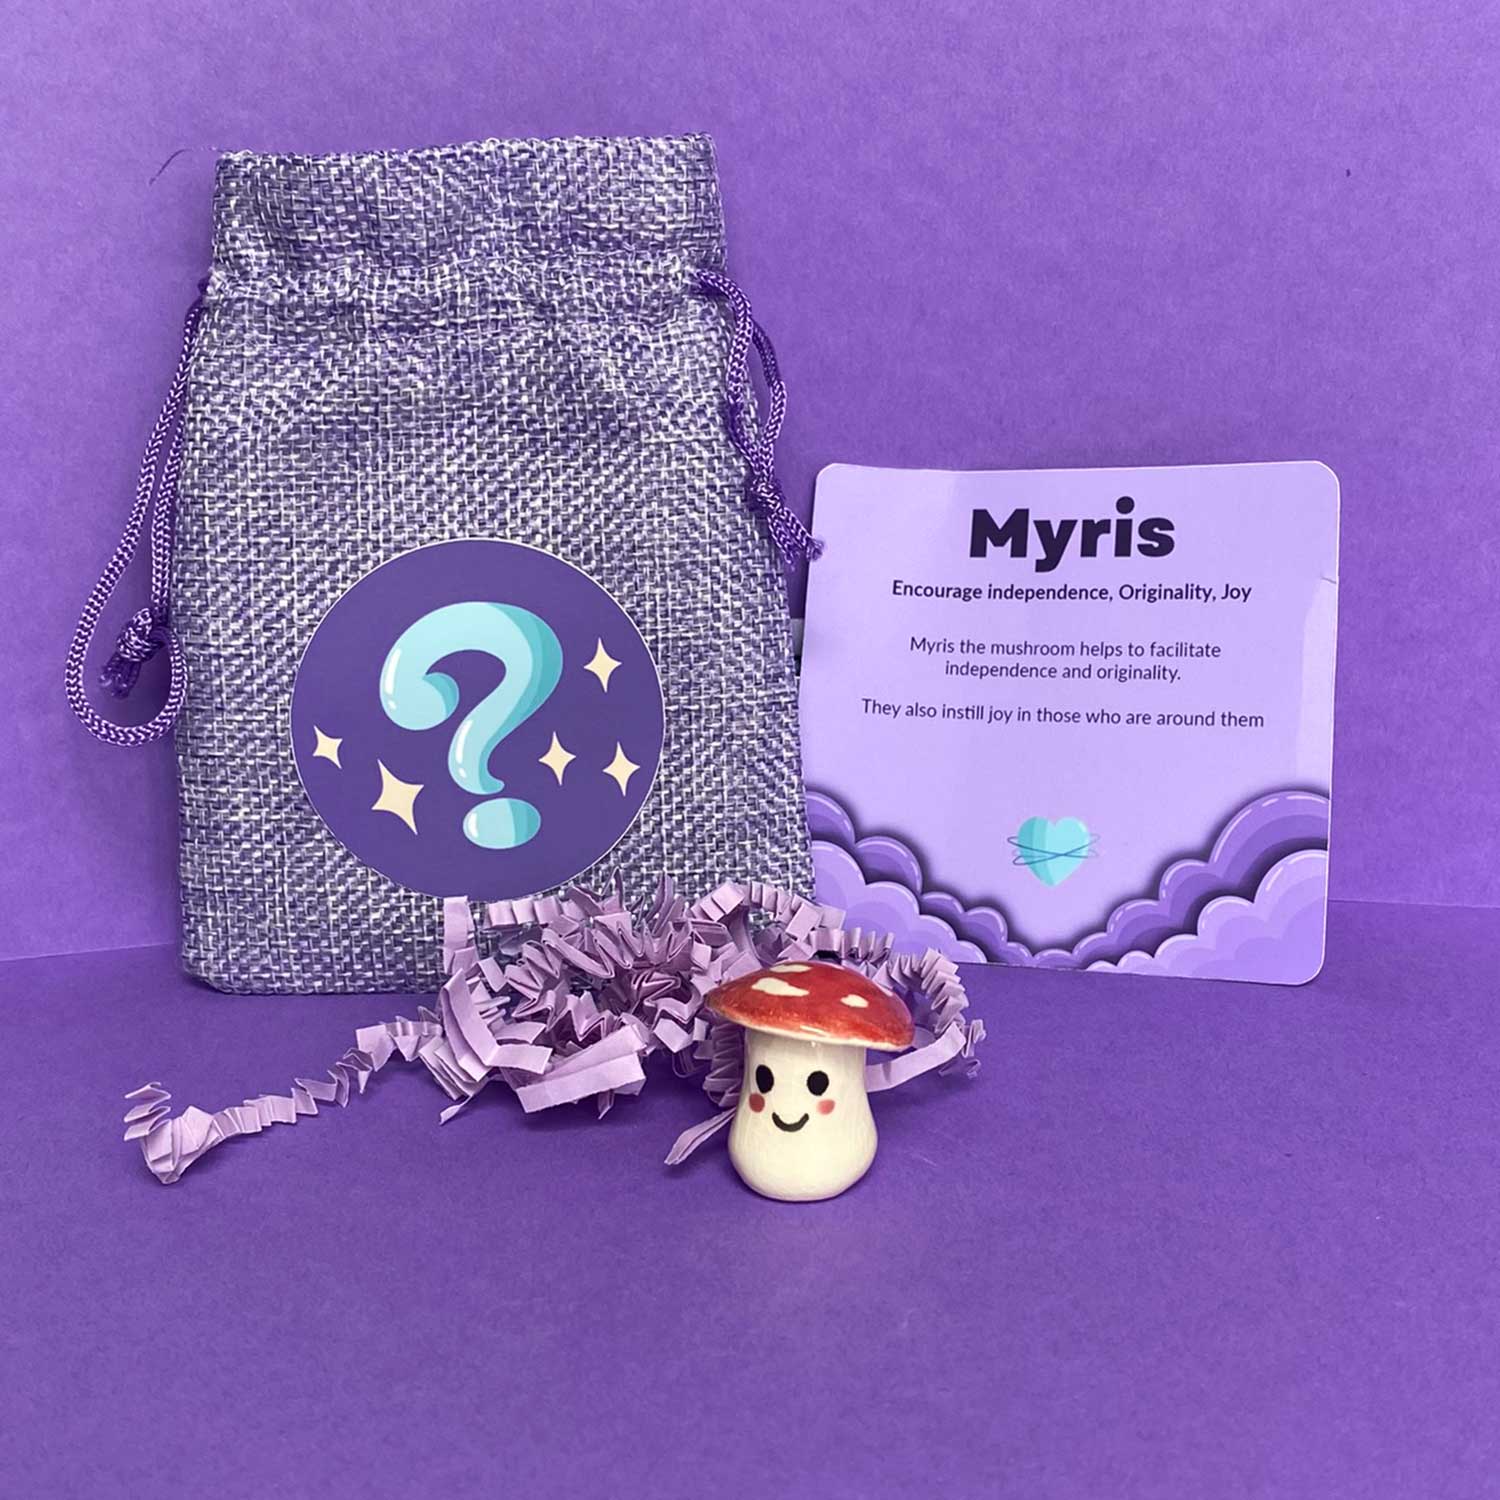 Myris the tiny mushroom figurine available in the mystery bag 